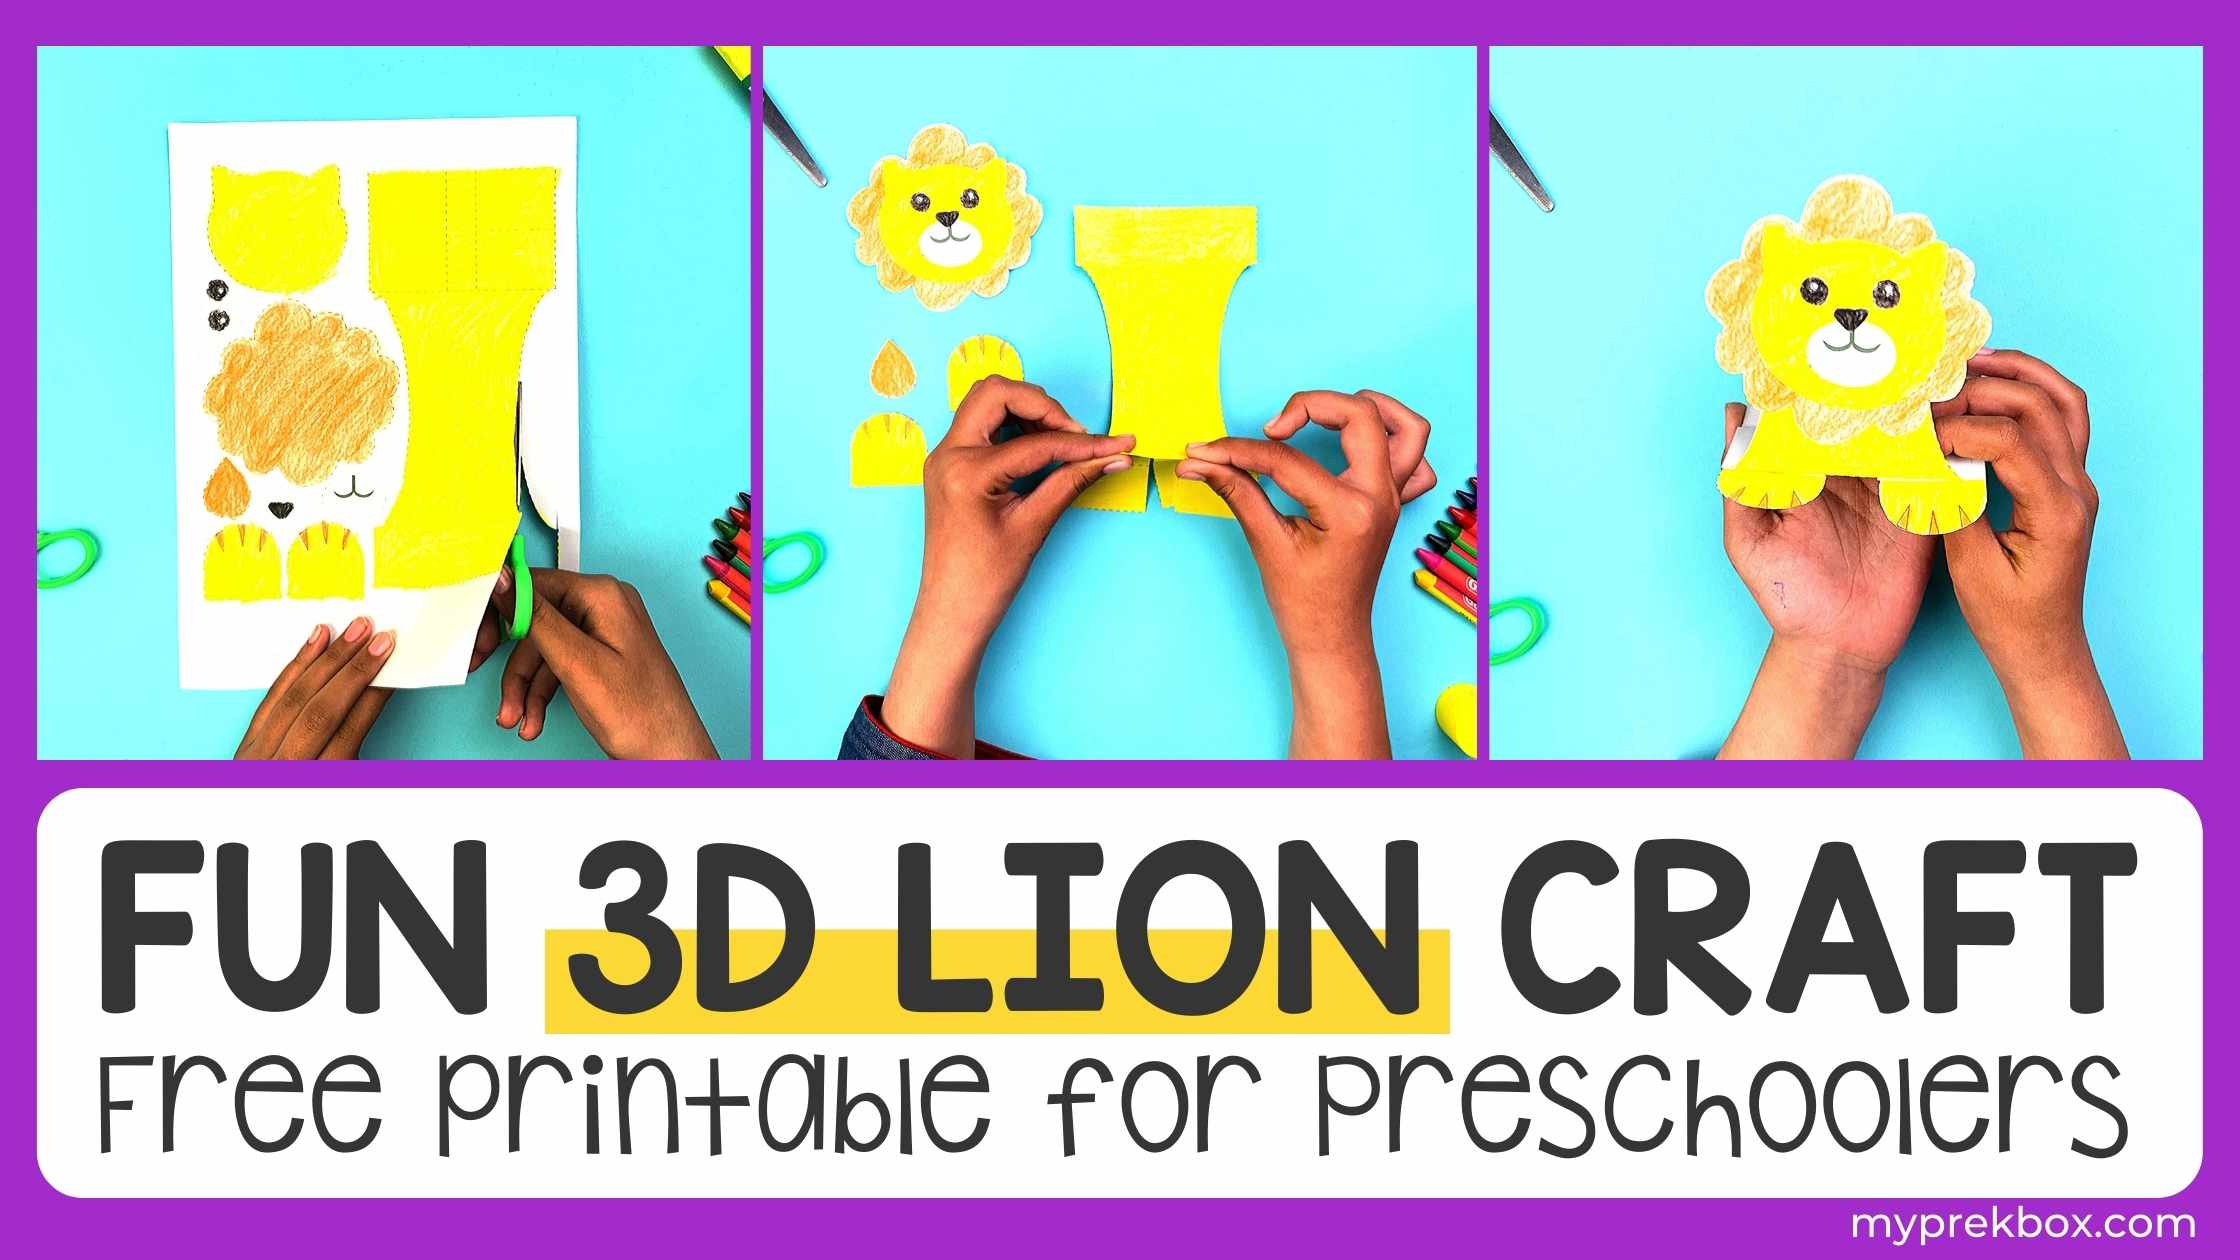 Fun 3D Lion Craft for Preschoolers